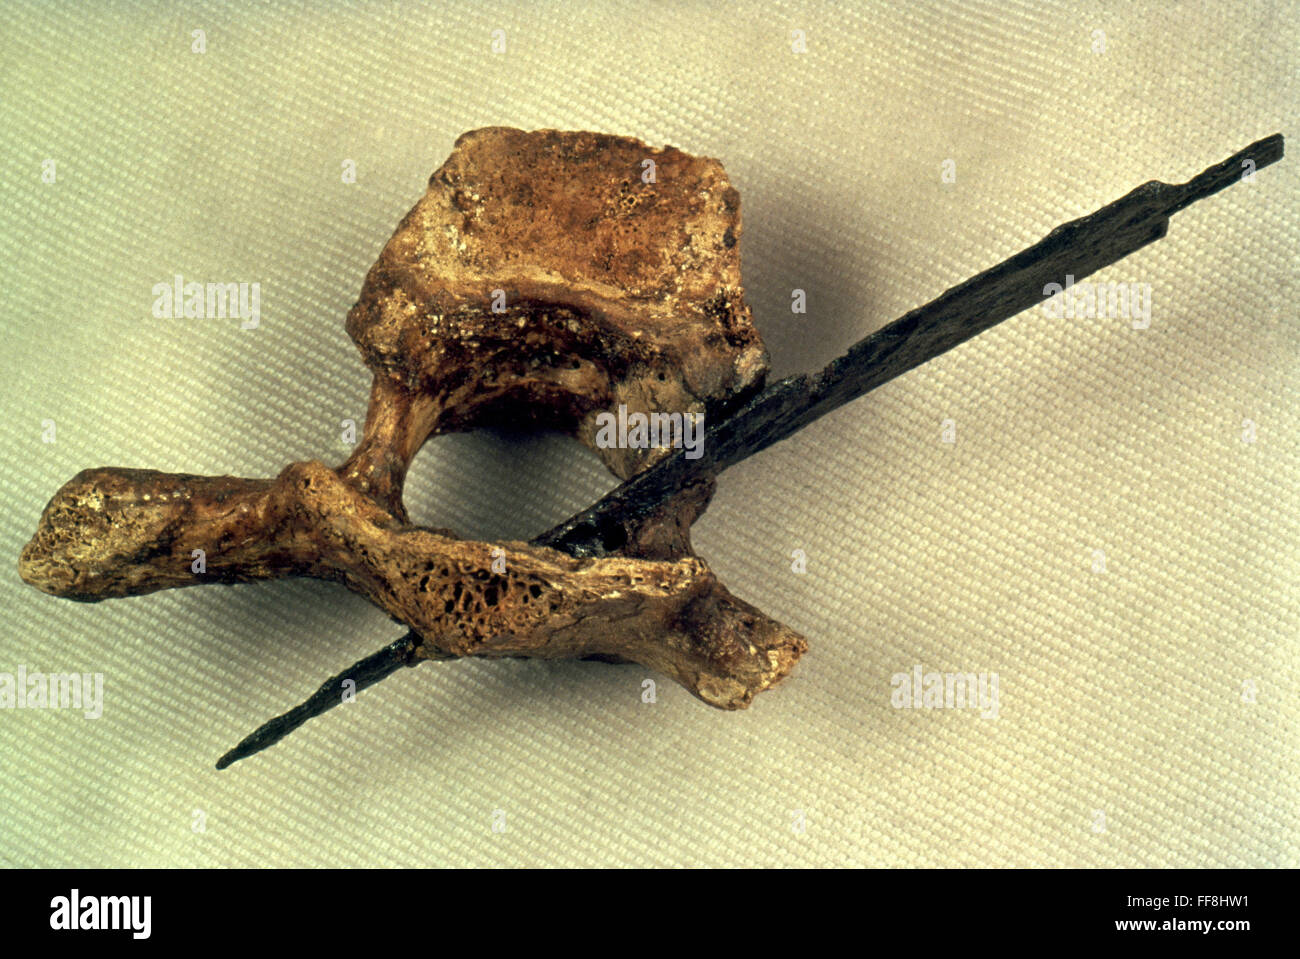 LITTLE BIGHORN, 1876. /nHuman vertebra with metal arrowhead from Little Bighorn battle site, 1876. Stock Photo